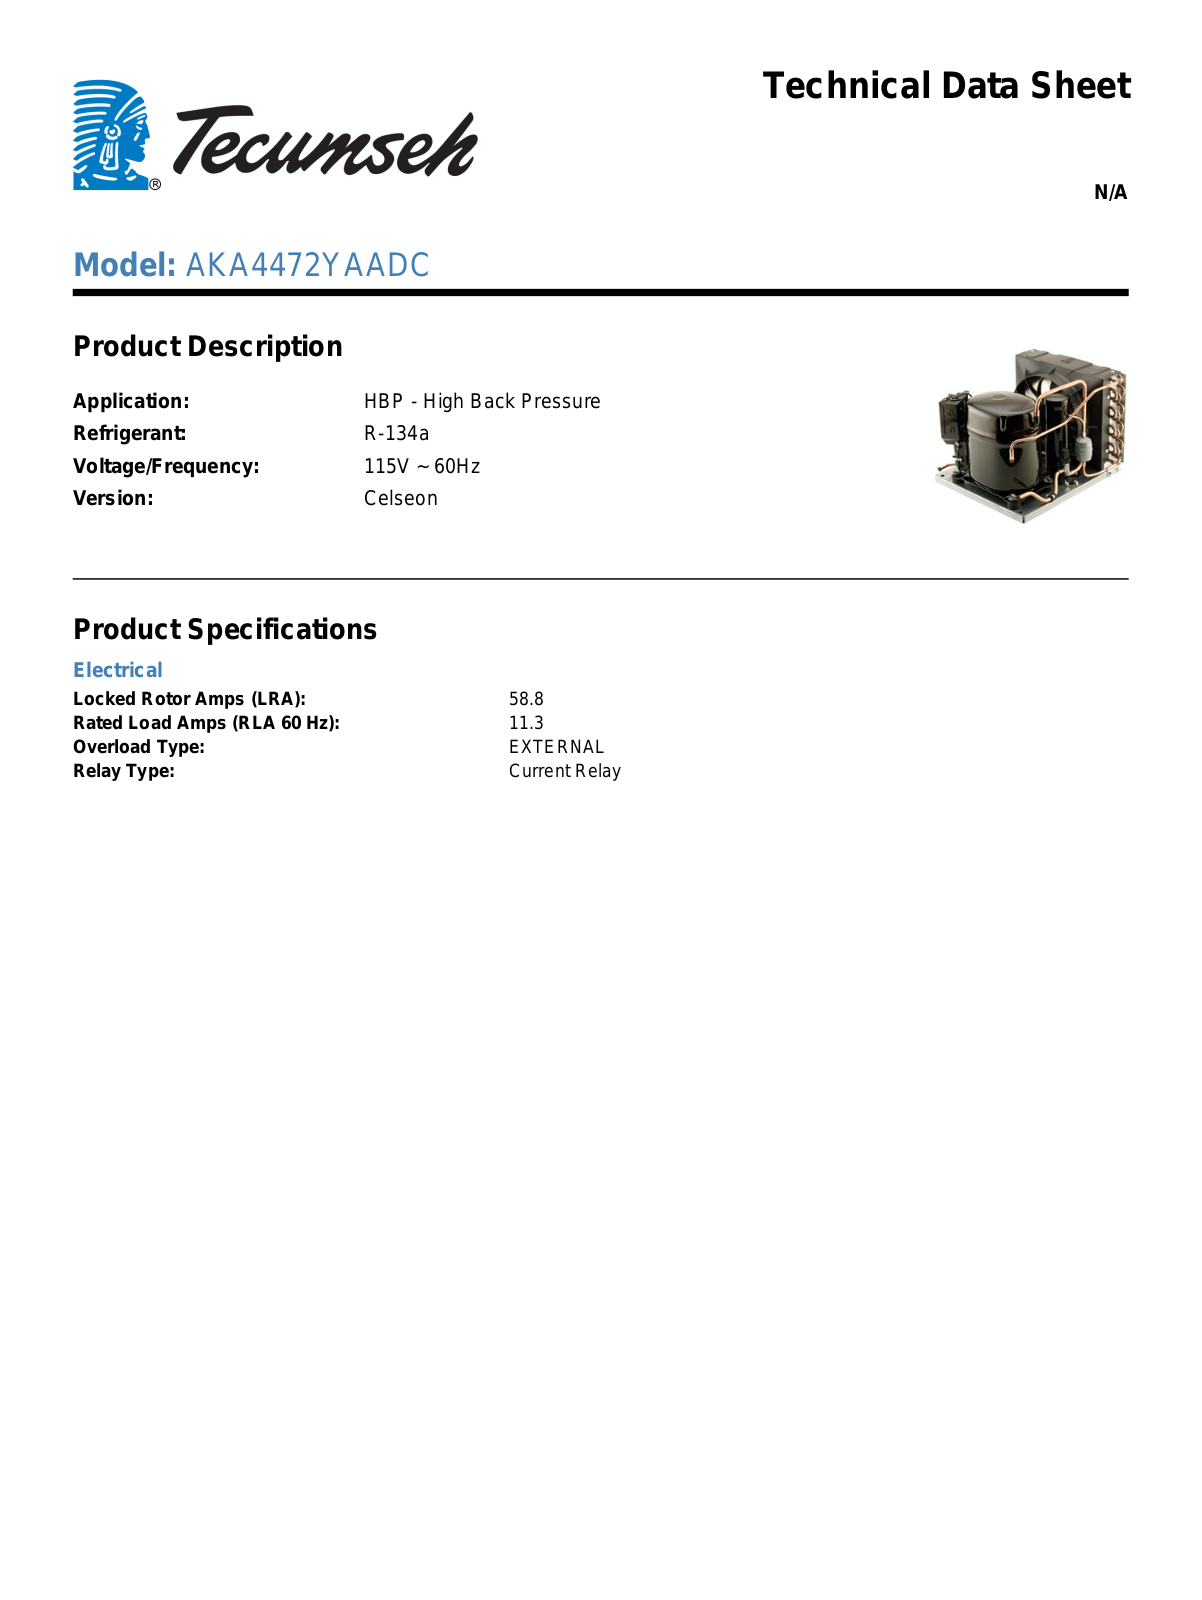 Tecumseh AKA4472YAADC Technical Data Sheet